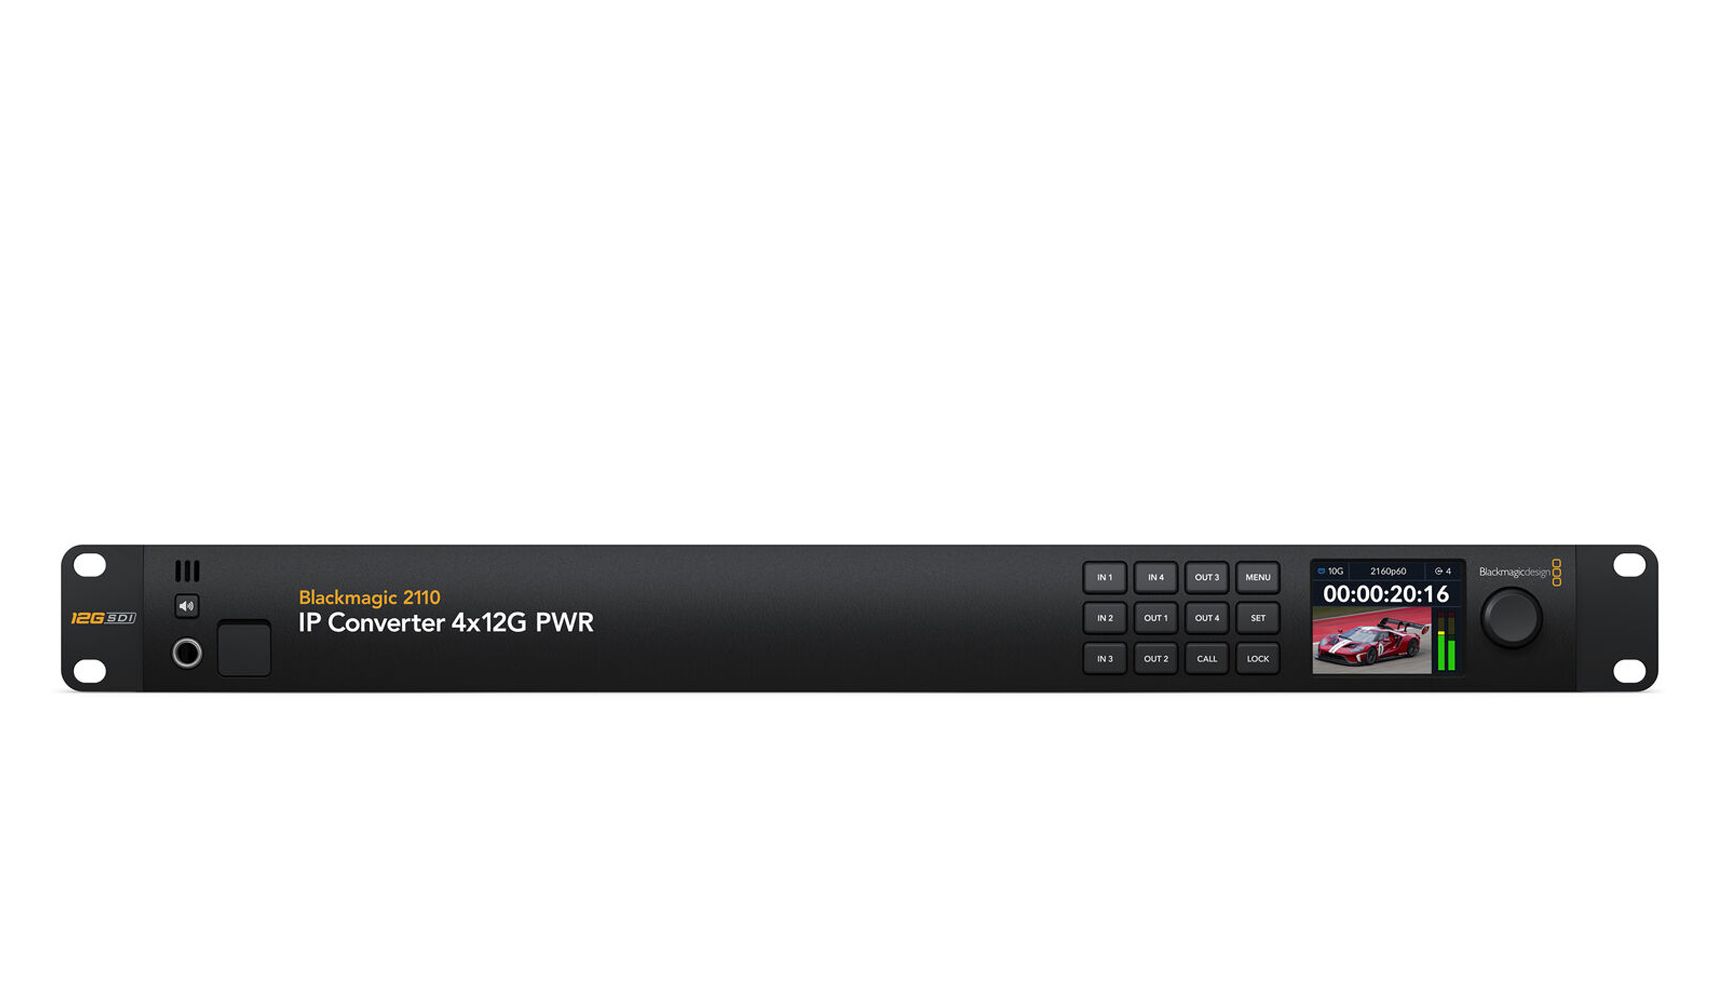 CONVNVIPB4:12GPWR - 2110 IP Converter 4x12G PWR ter